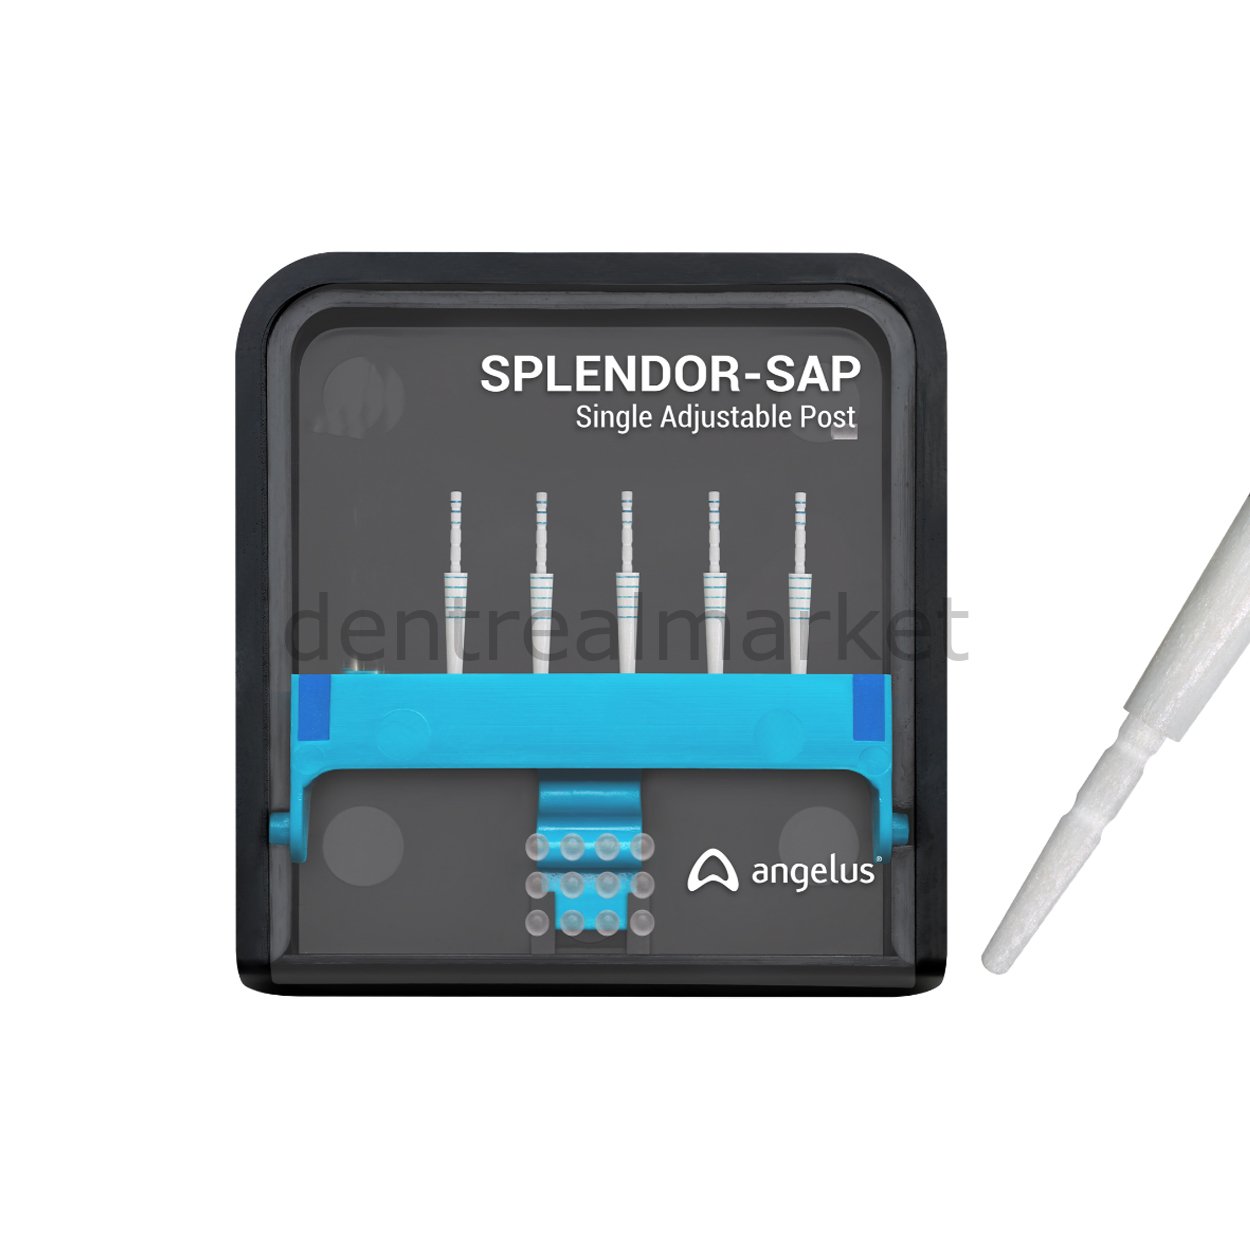 Splendor-SAP Fiber Post Refill - Adjustable Post